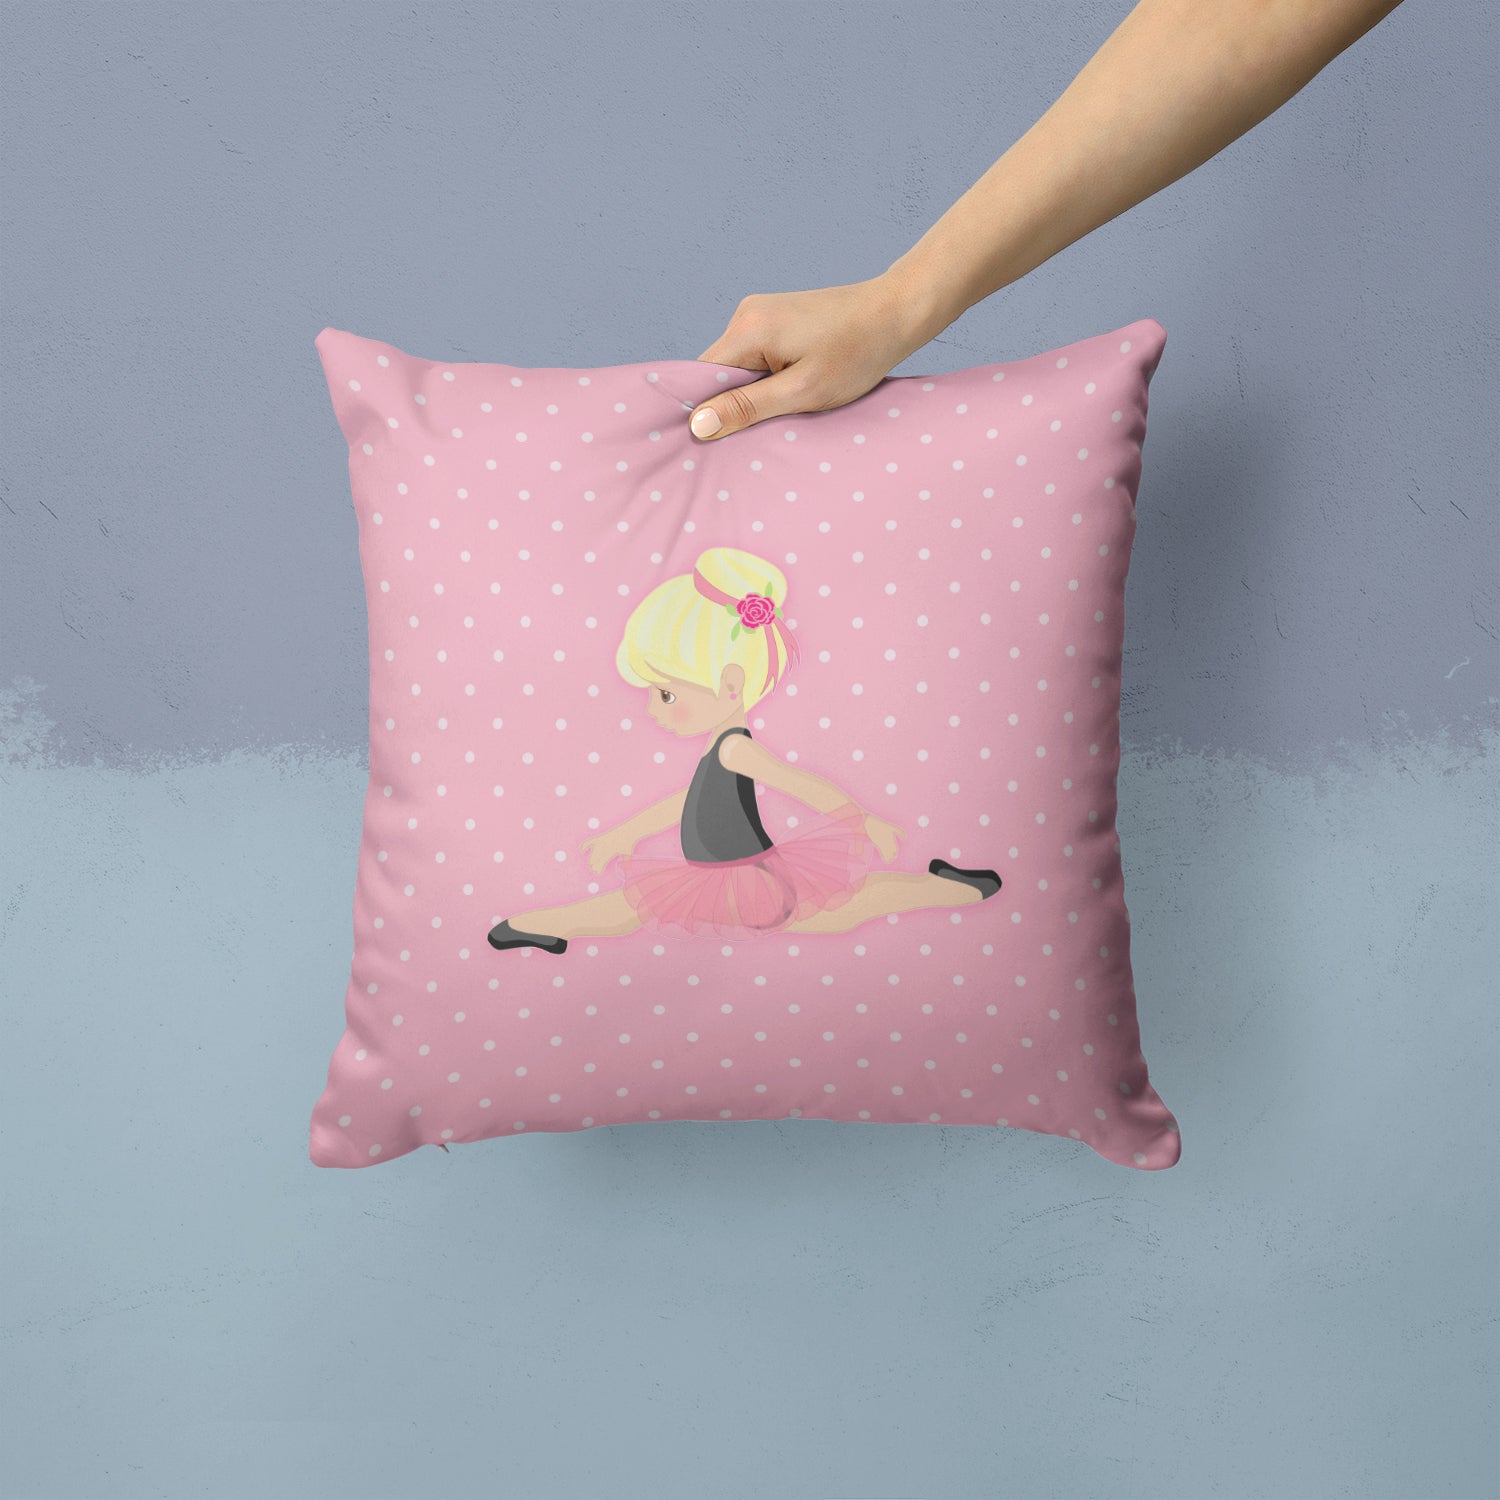 Ballerina Blonde Jete Fabric Decorative Pillow BB5166PW1414 - the-store.com